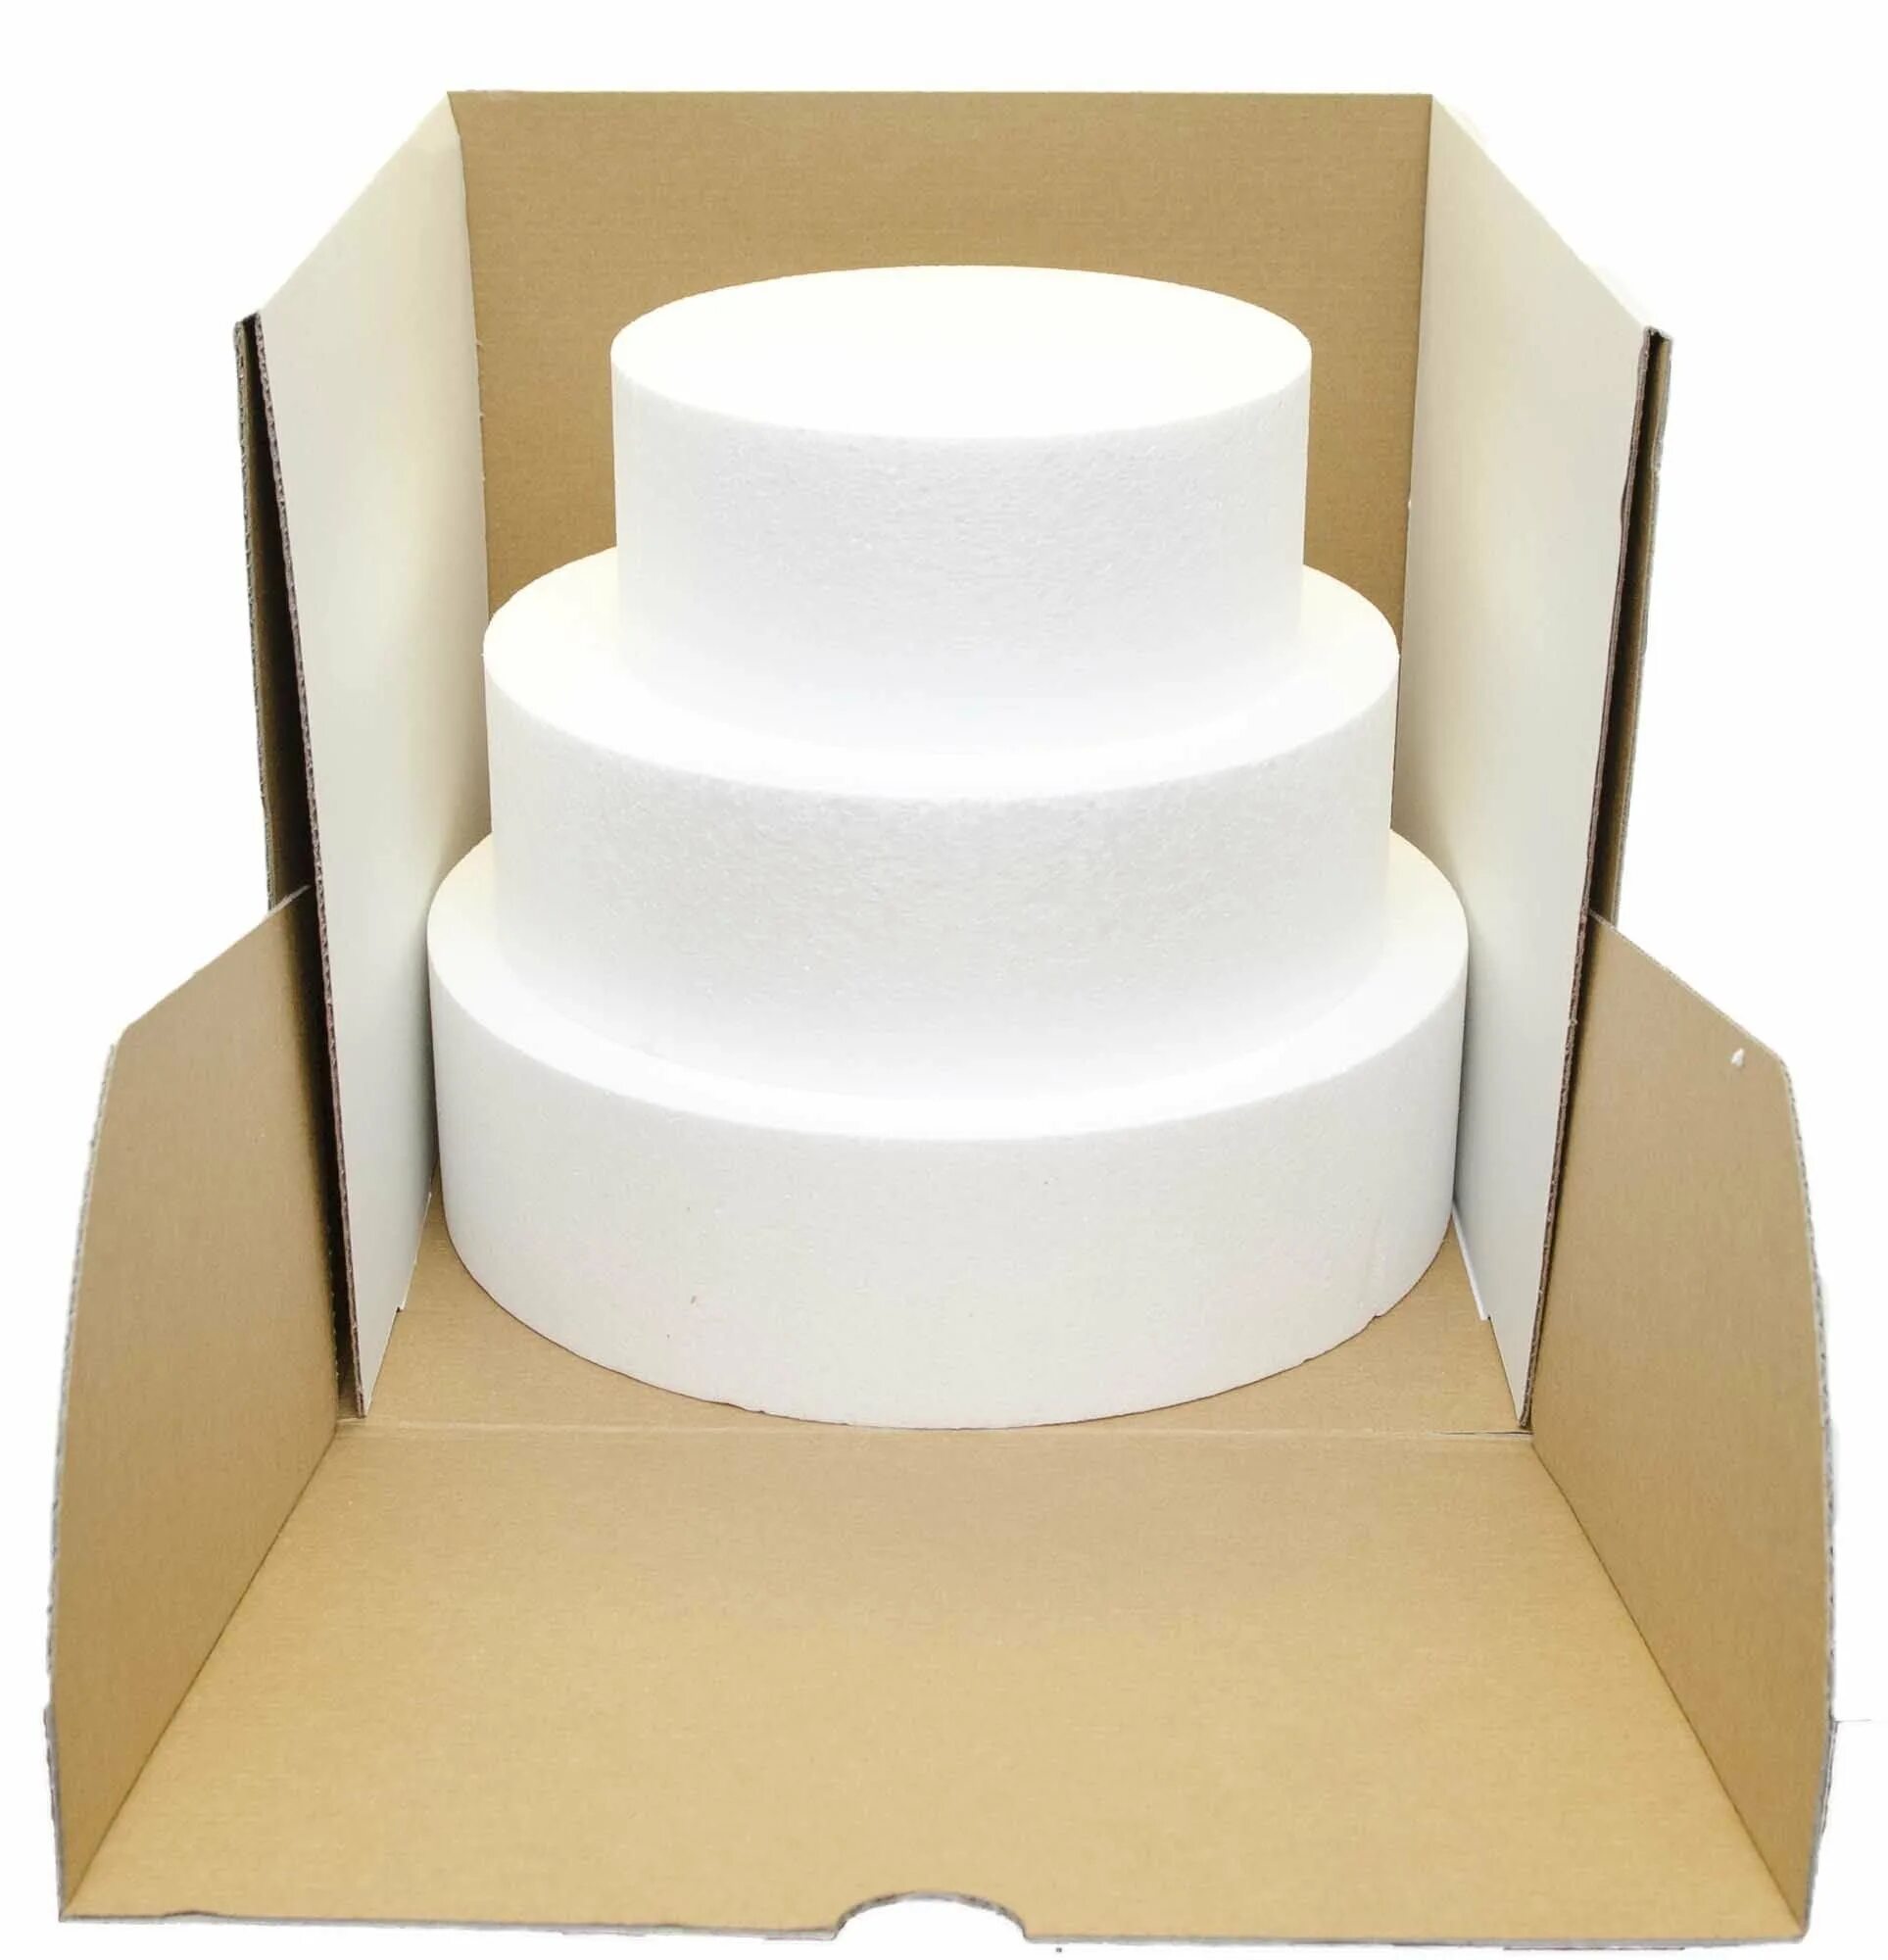 Коробка для ярусного торта. Упаковка для двухярусного торта. Коробка для двухъярусного торта. Коробки для многоярусных тортов. Производитель коробок для тортов